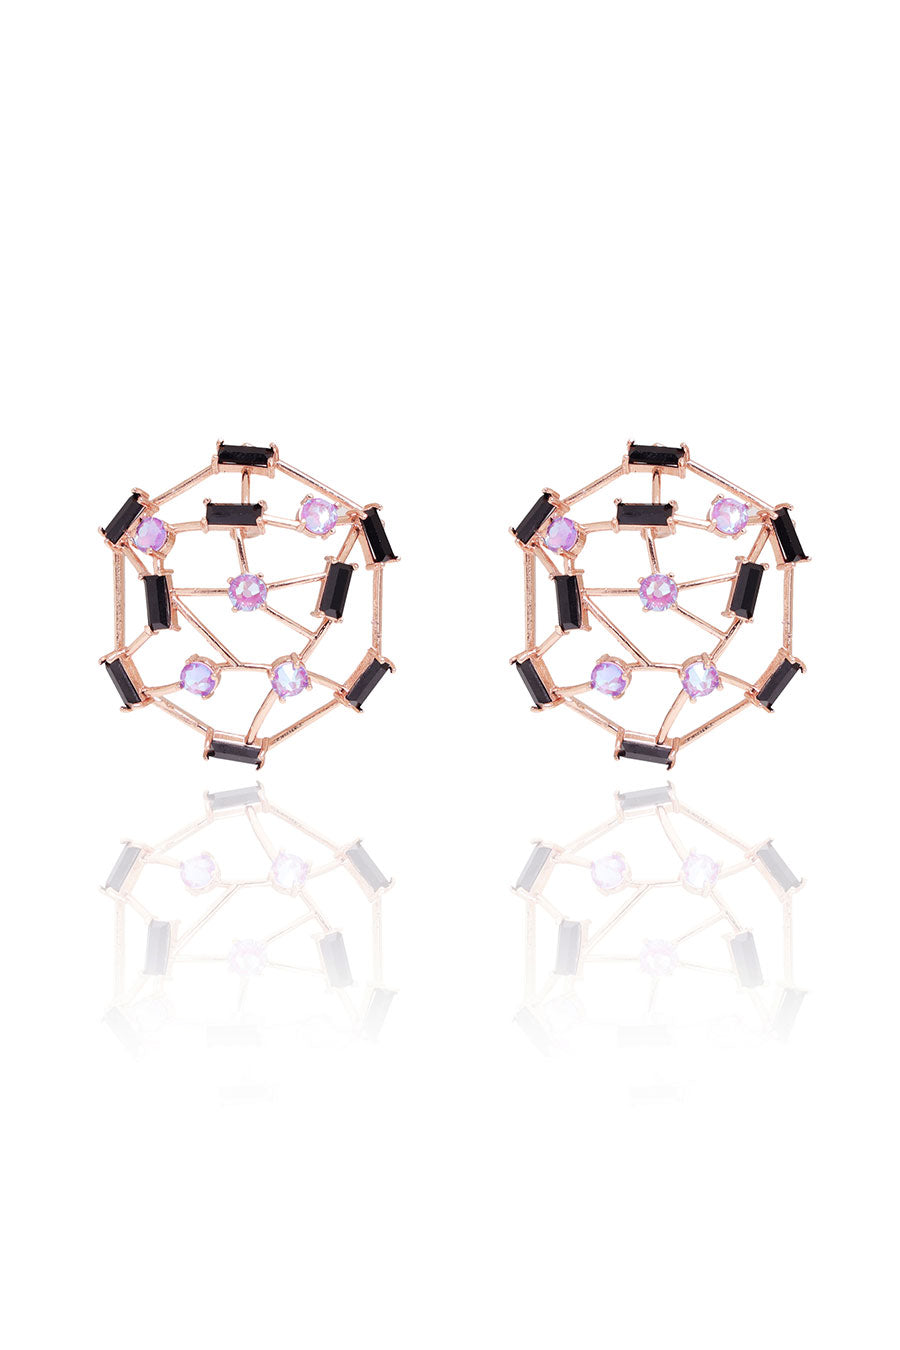 Candy Floss - Purple Swarovski Cage Stud Earrings